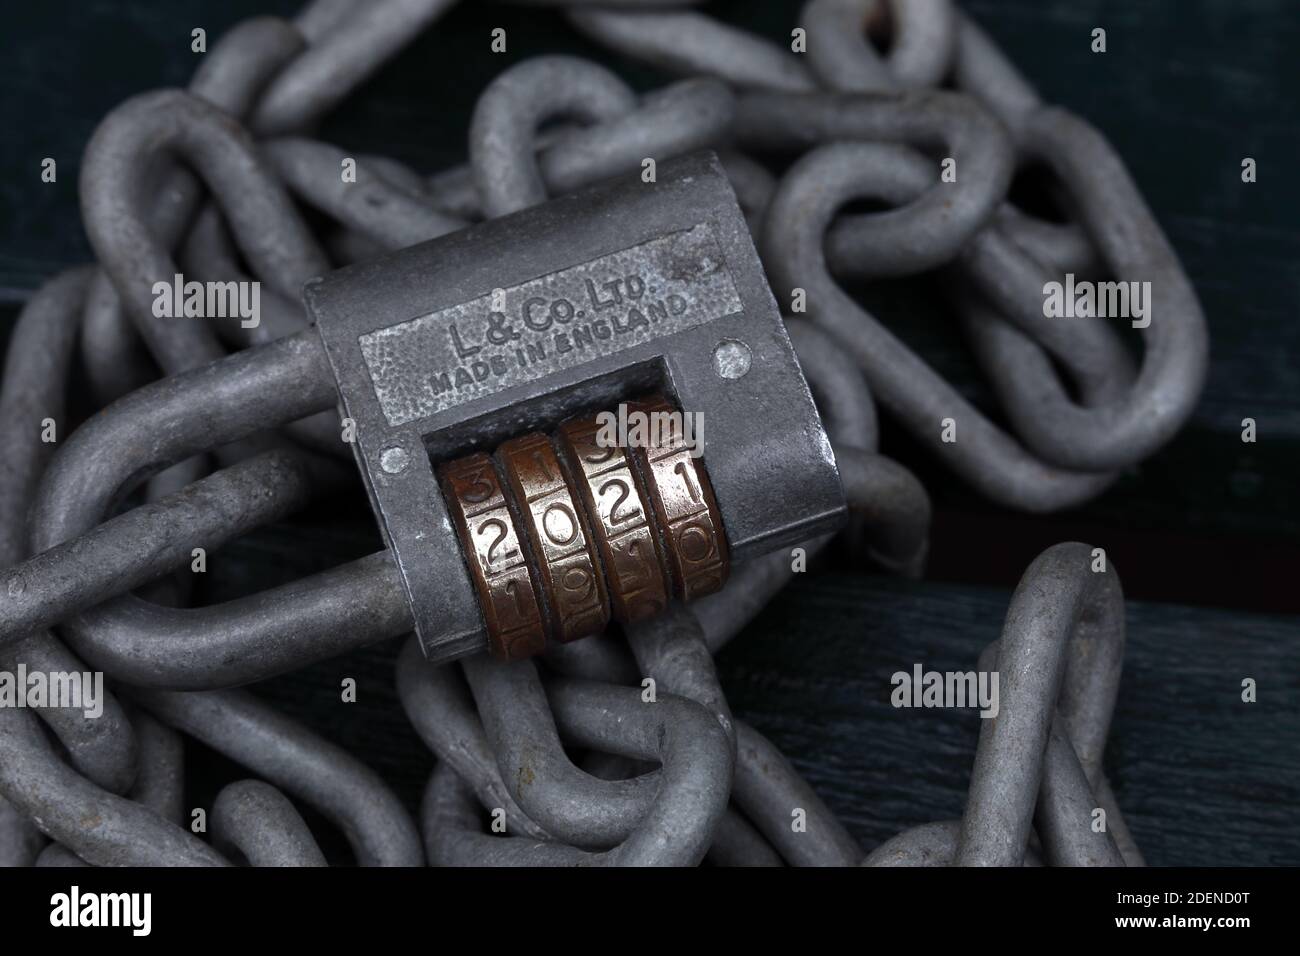 Coronavirus Lockdown2021, chains and padlock, Locking down to stop the spread of Covid-19 Stock Photo